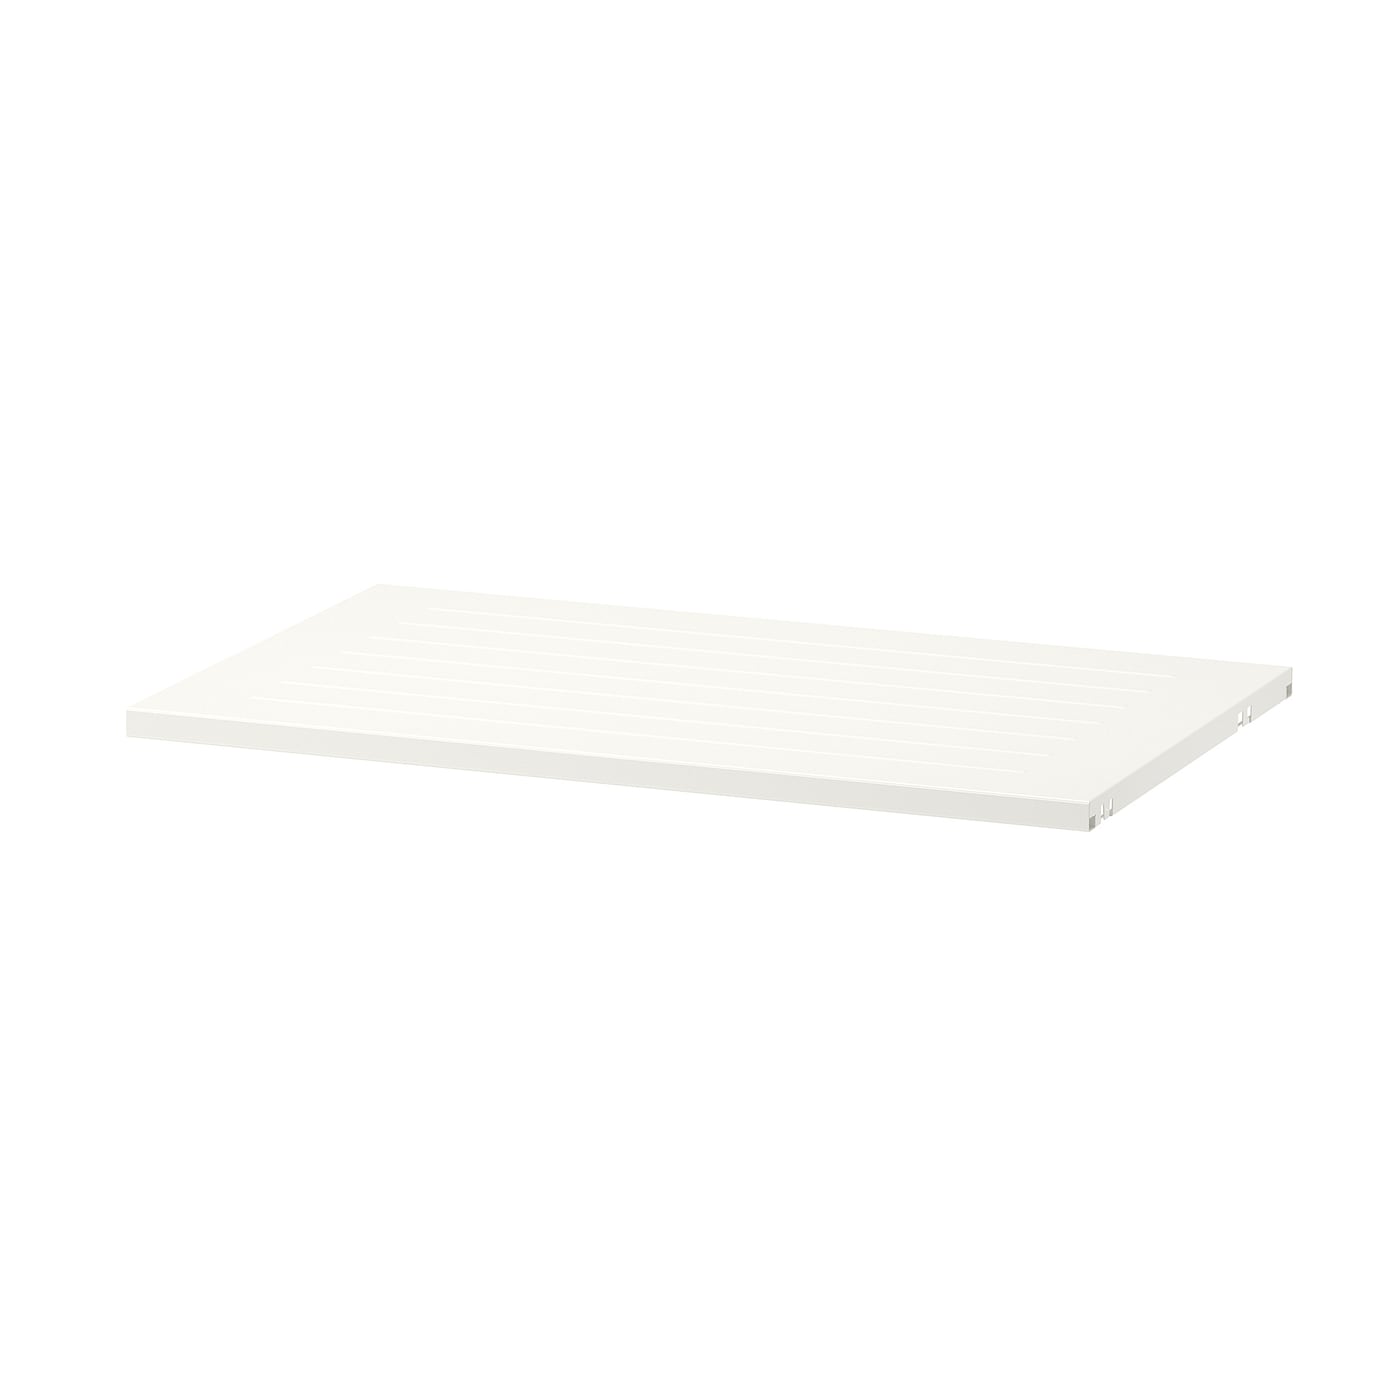 Полка для обуви - IKEA BOAXEL/БОАКСЕЛЬ ИКЕА, 60x40 см, белый